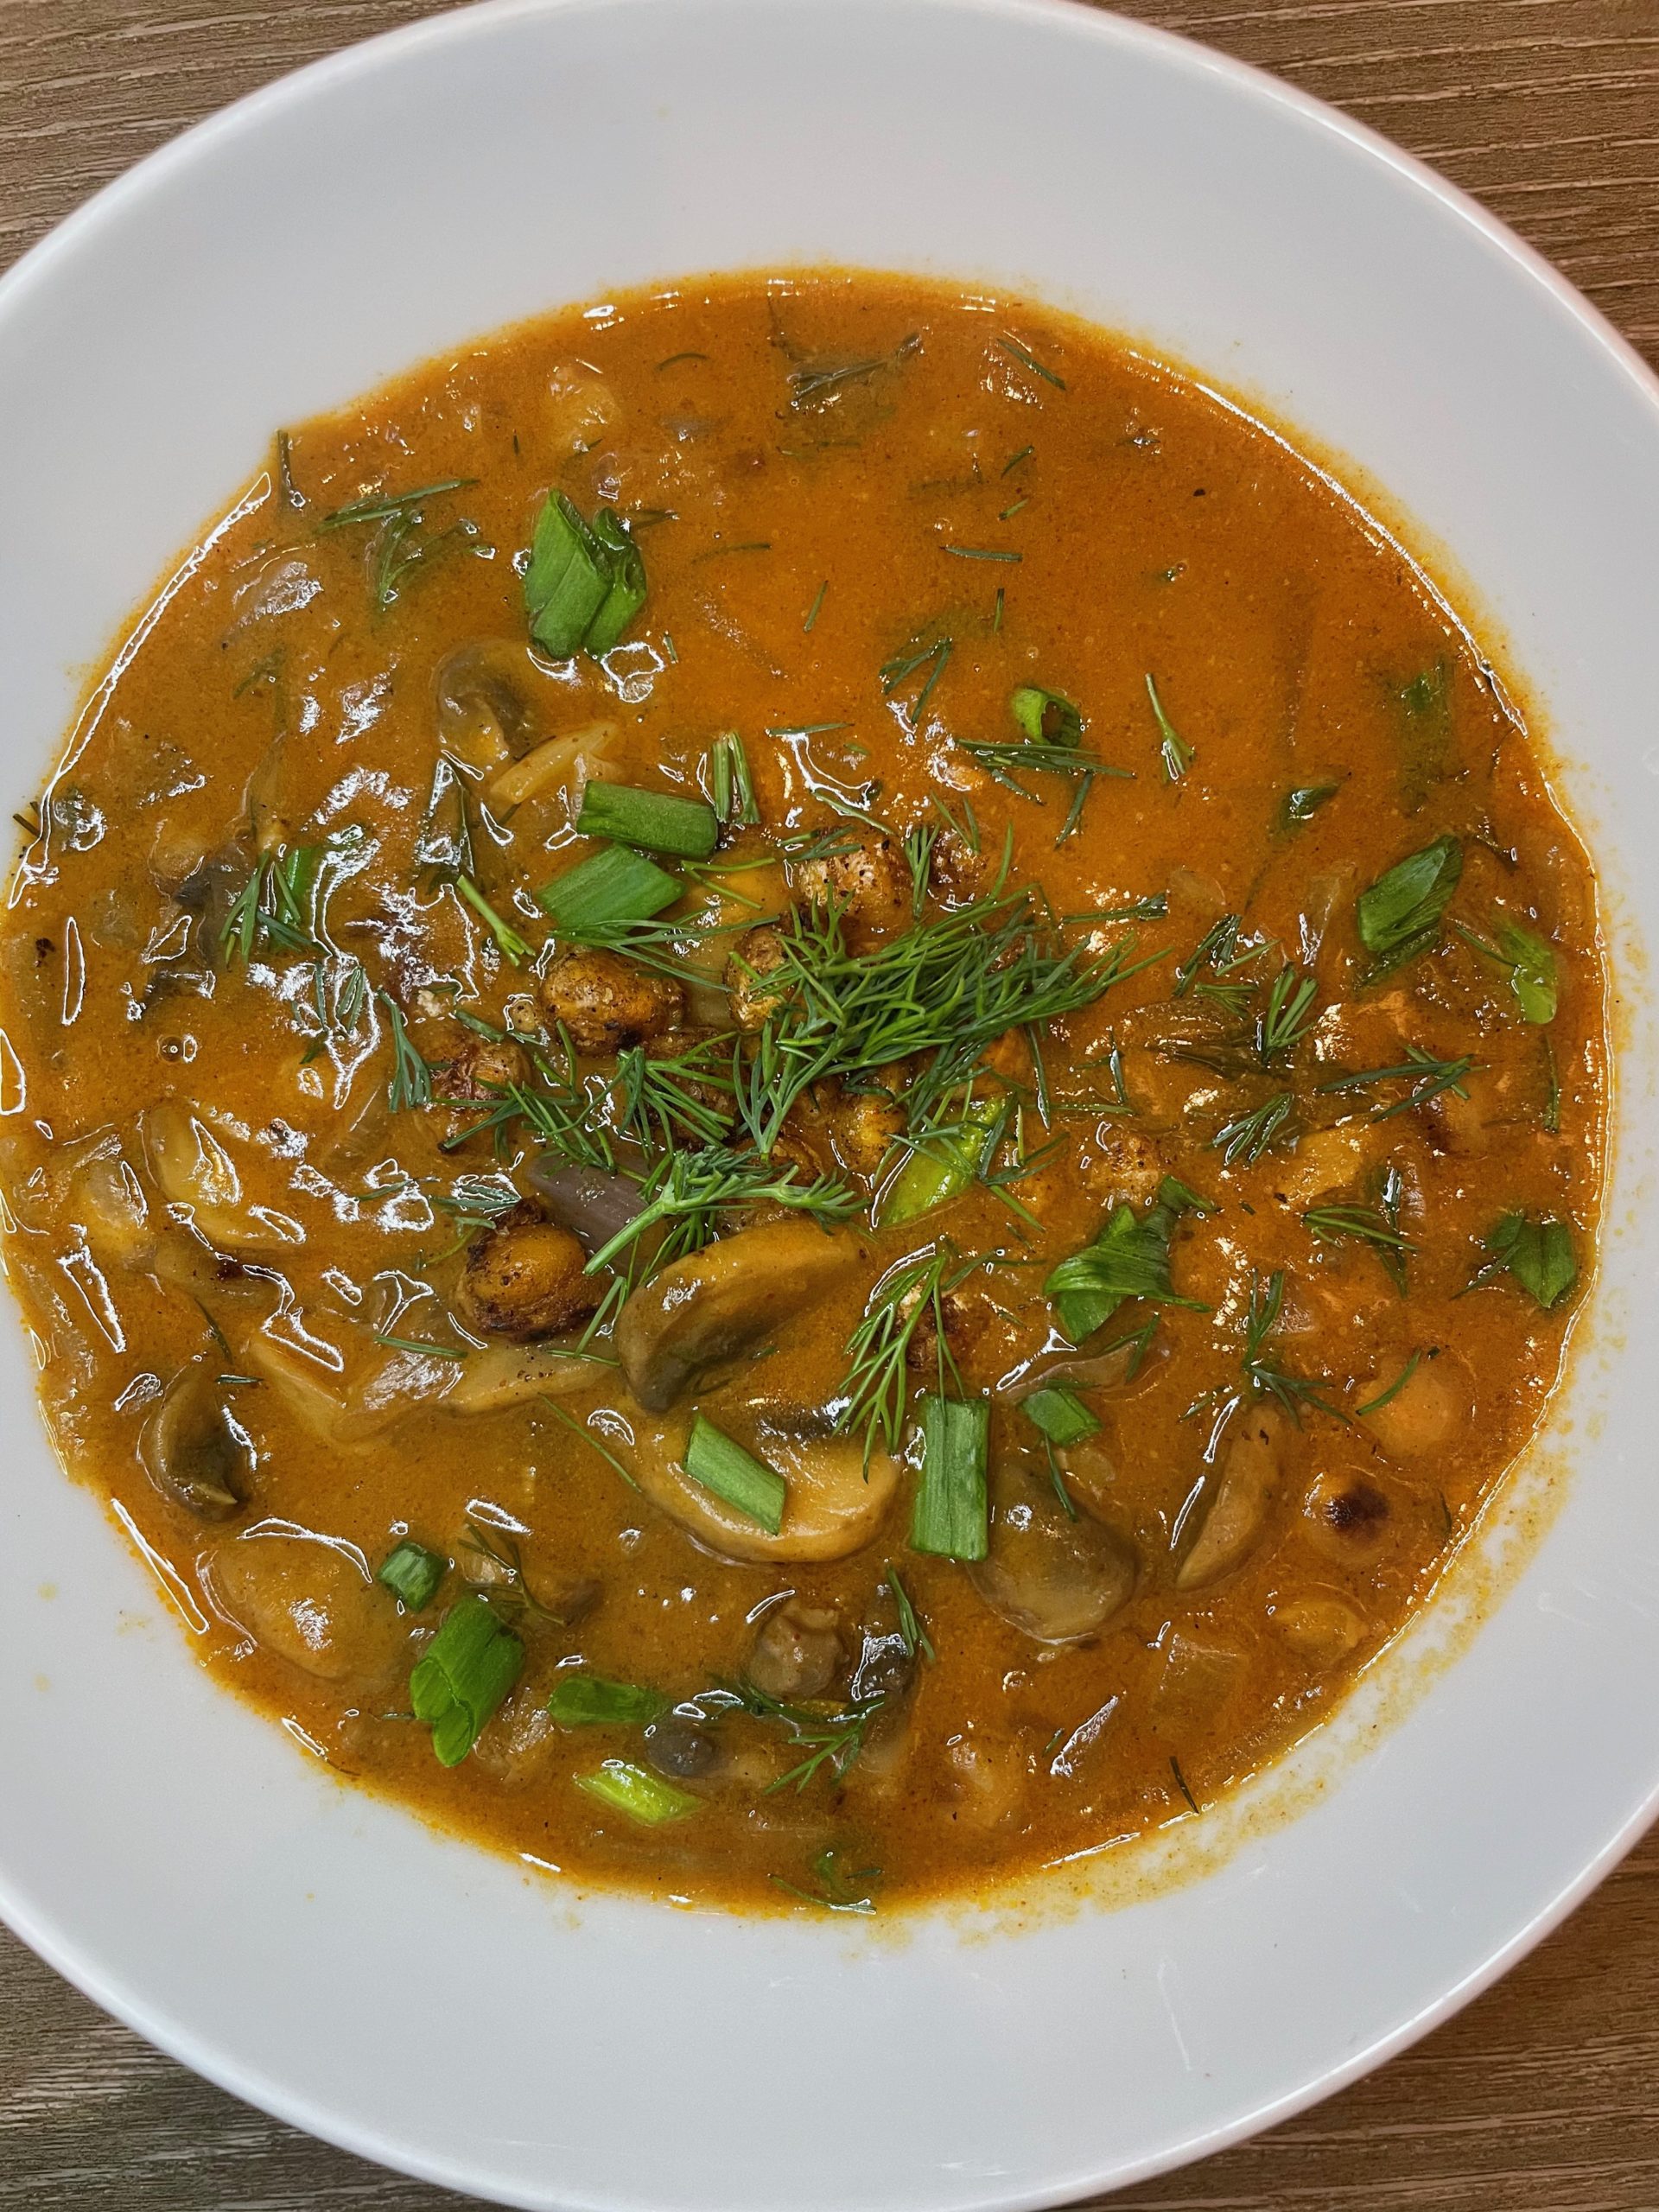 Tasty Vegan Hungarian Mushroom Soup is ready!